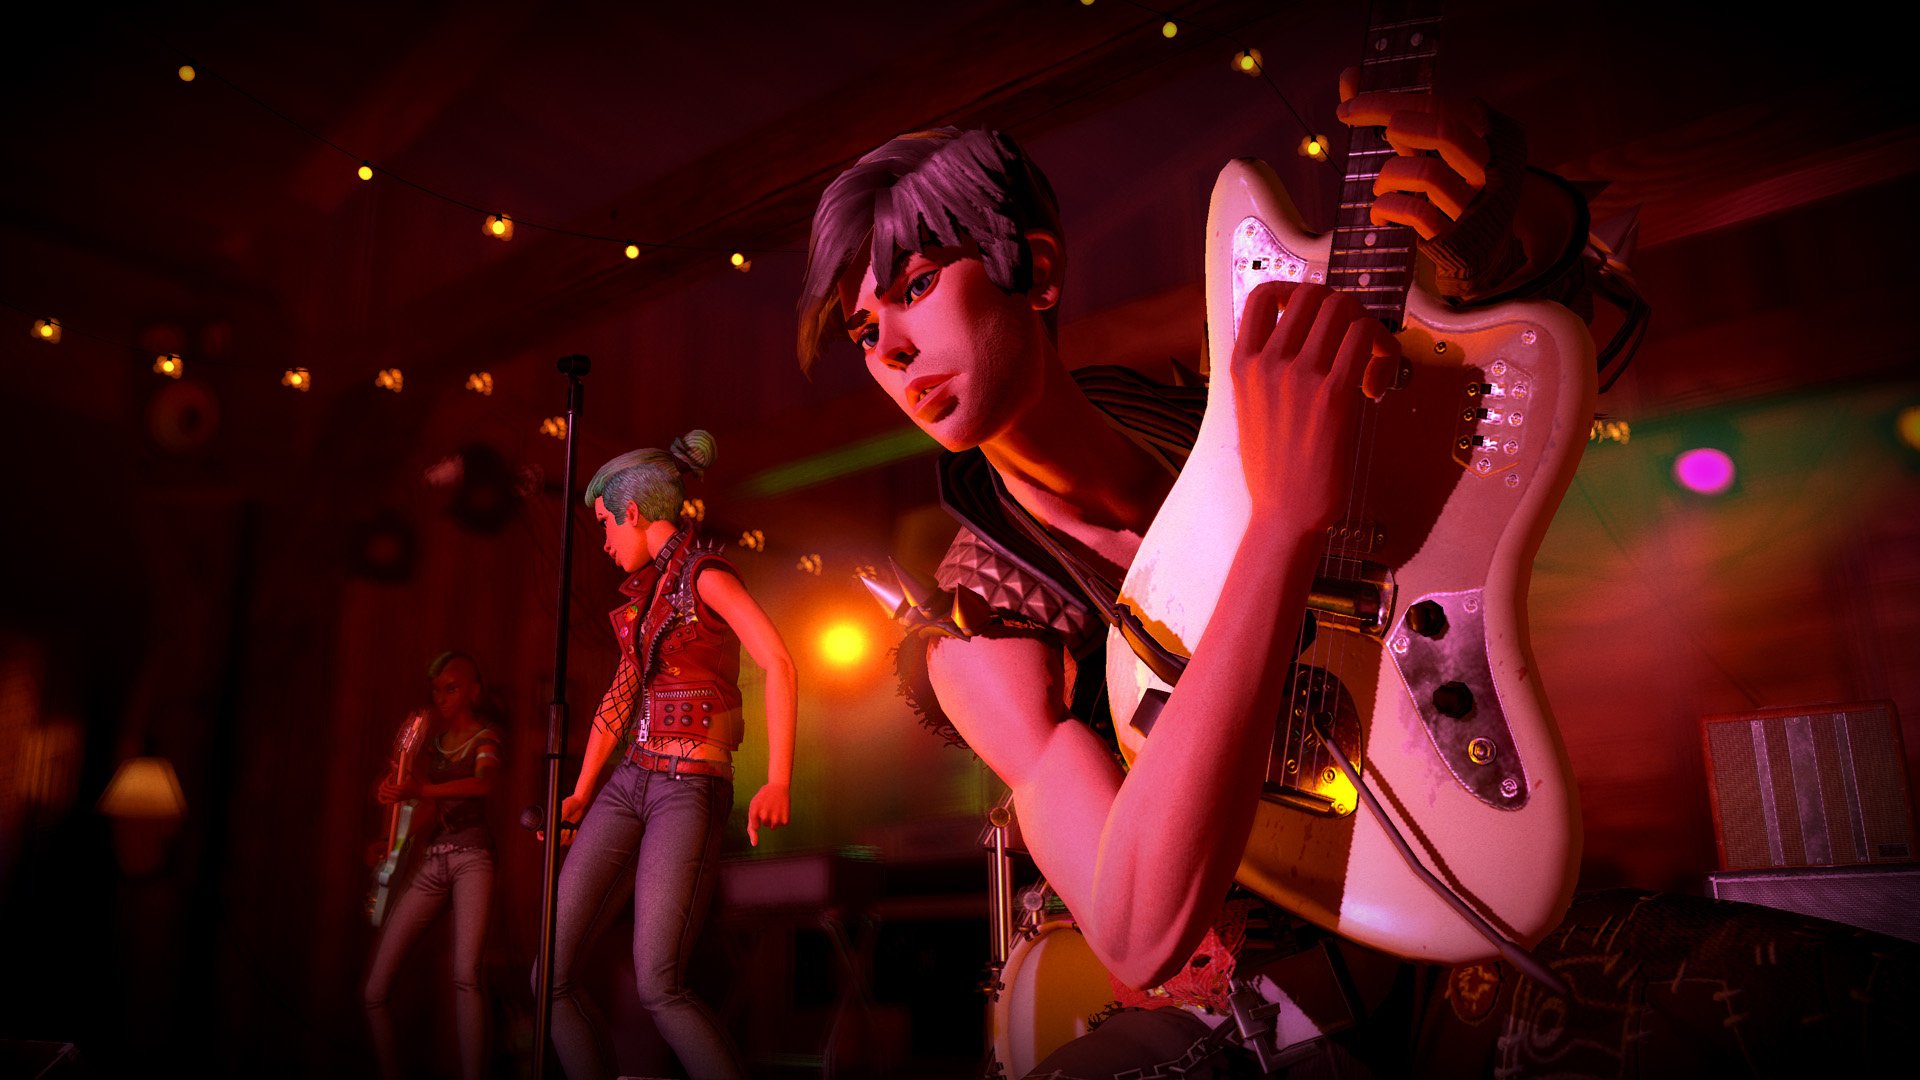 Rock Band 4 (PS4 / PlayStation 4) Game Profile | News, Reviews, Videos